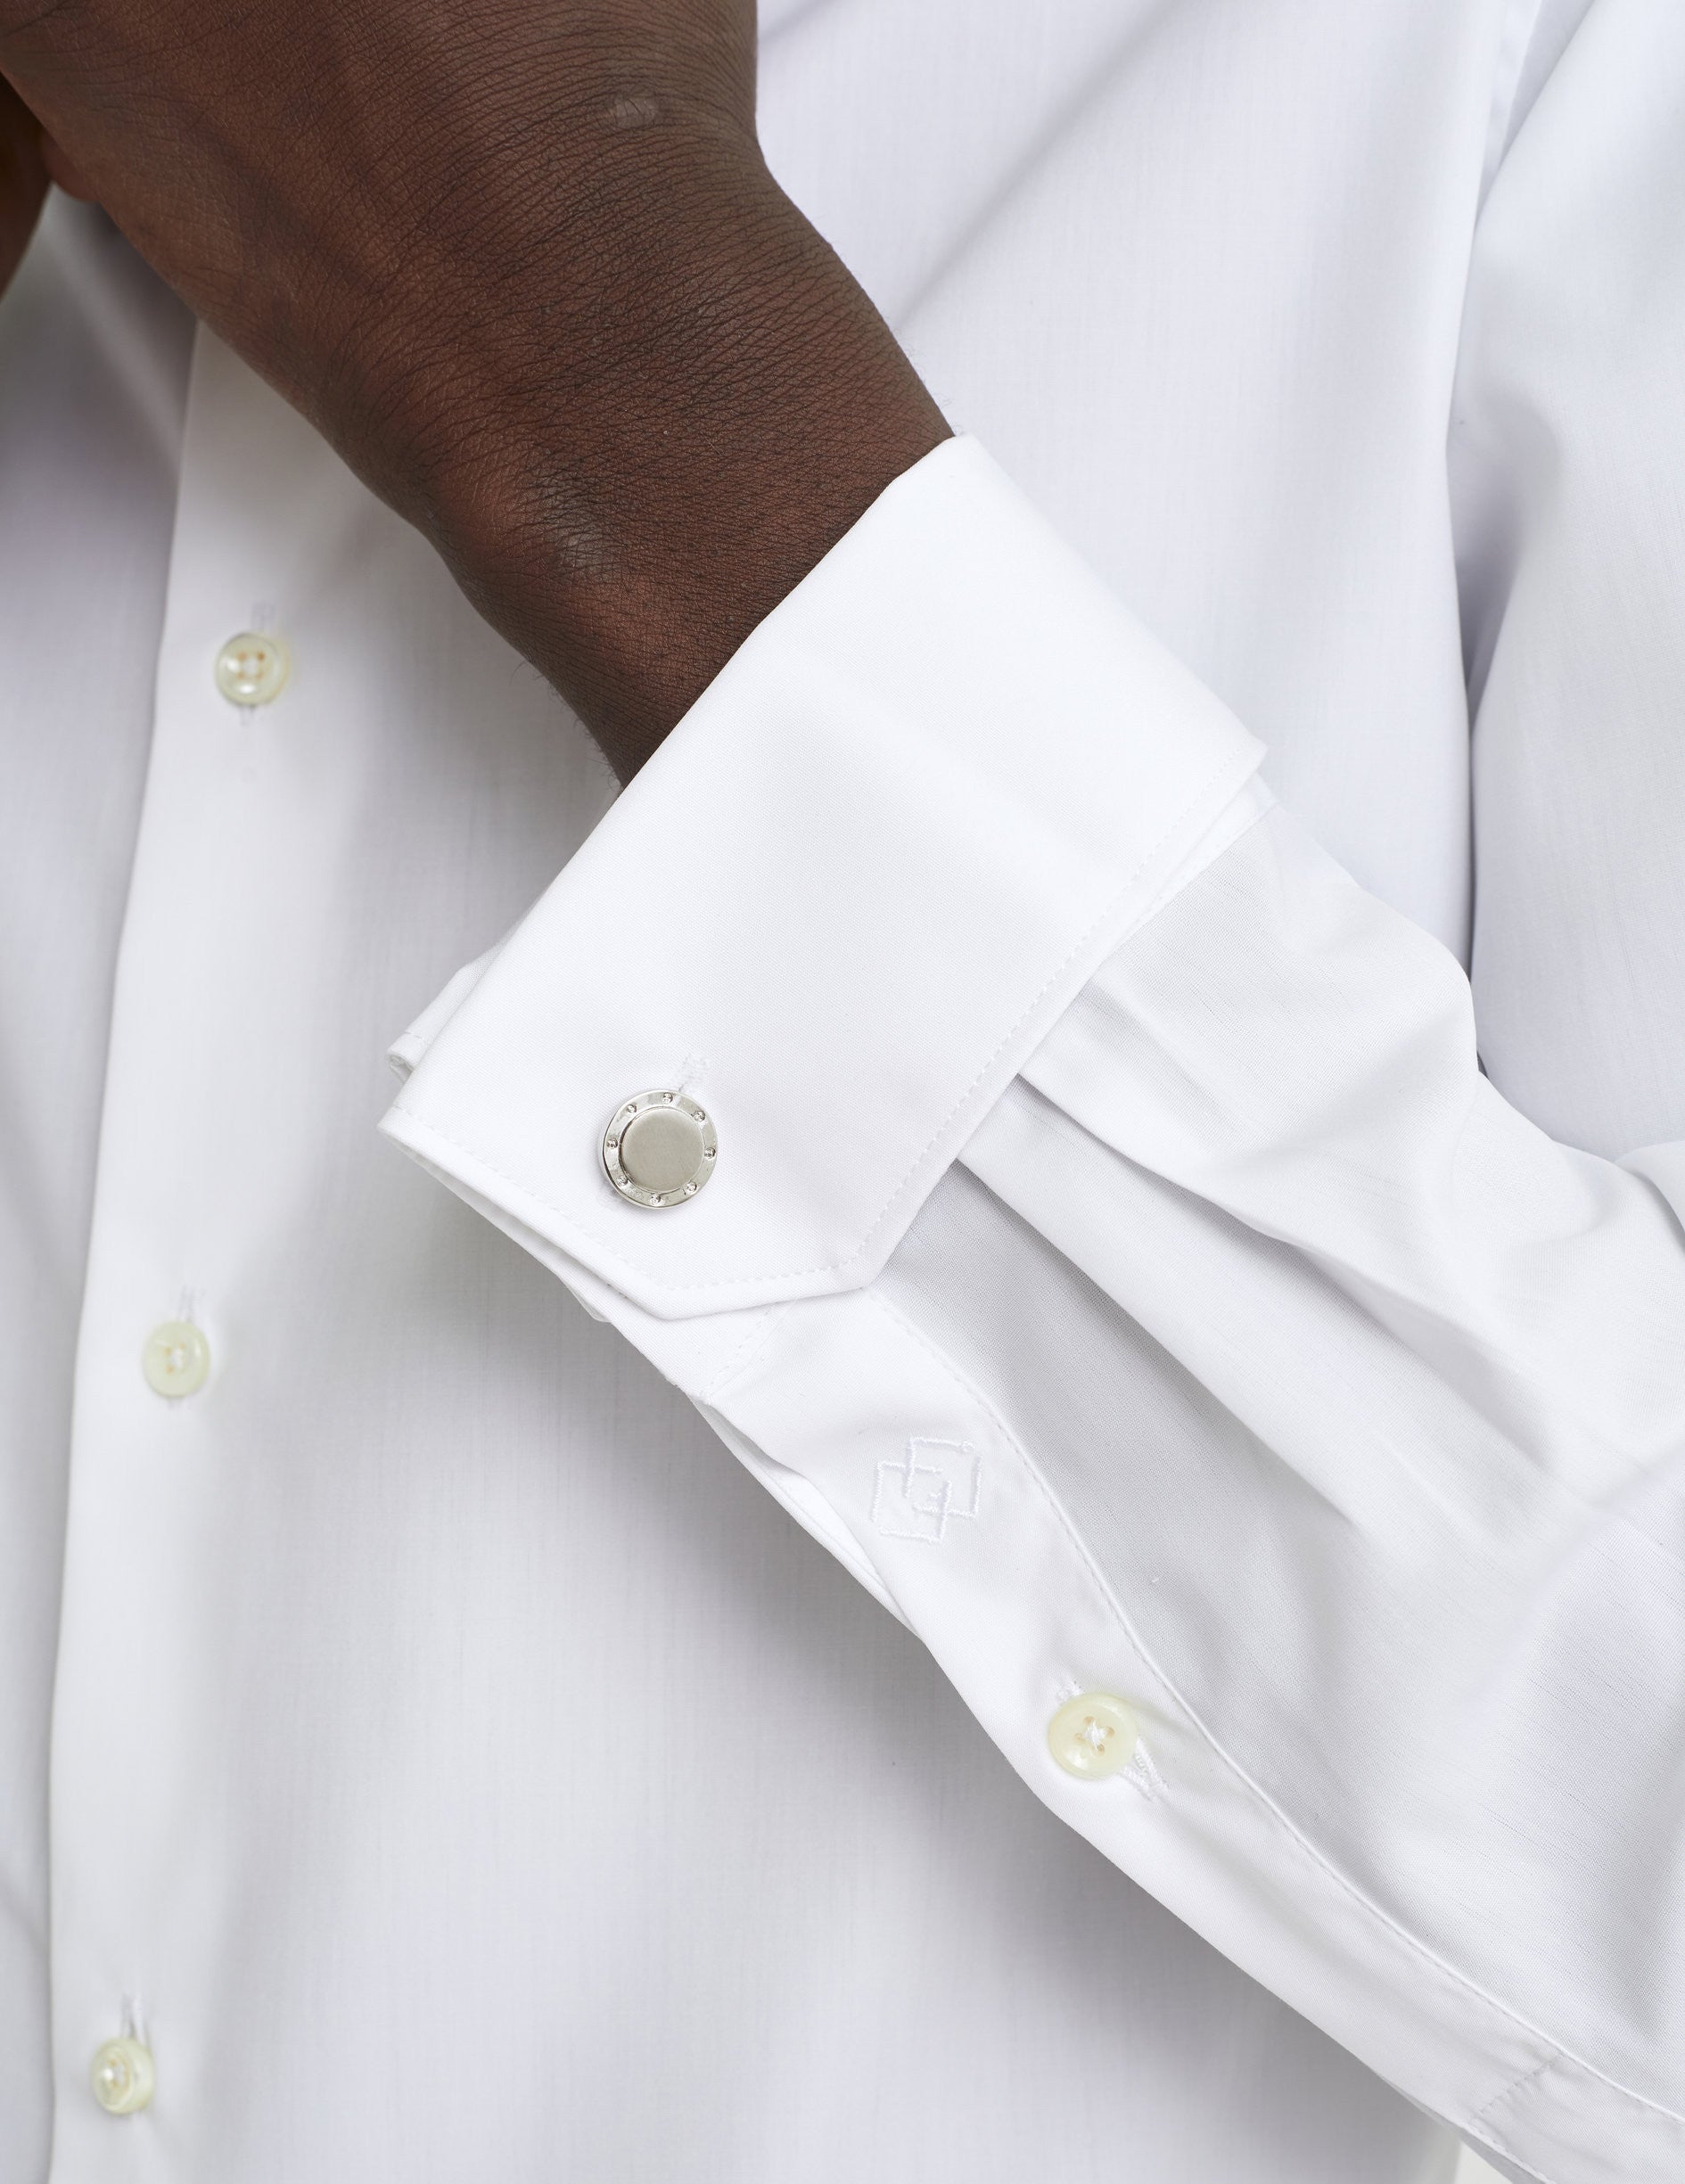 Classic white shirt - Poplin - Italian Collar - Musketeers Cuffs